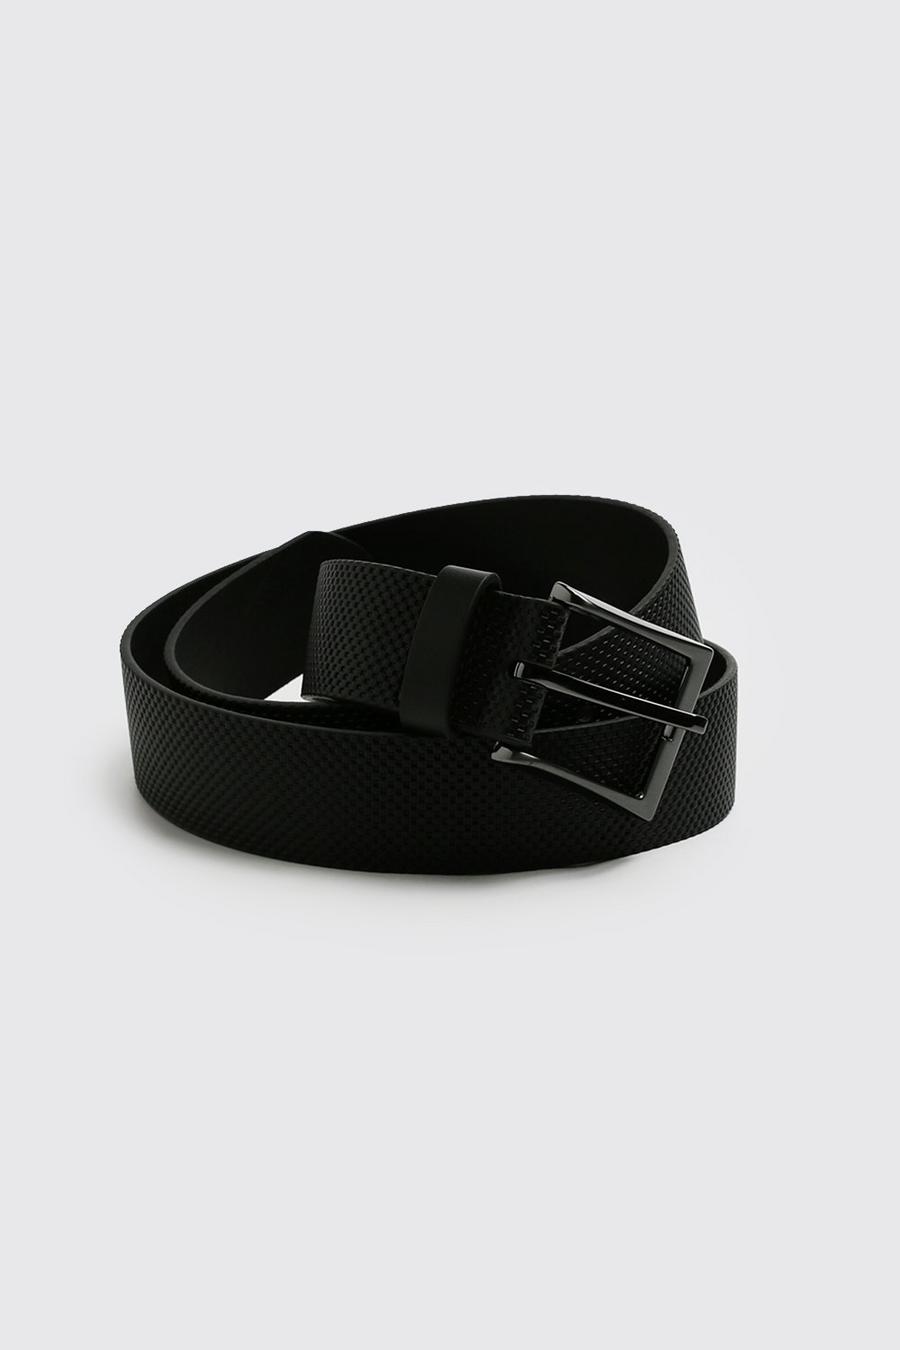 Black Faux Leather Textured Belt